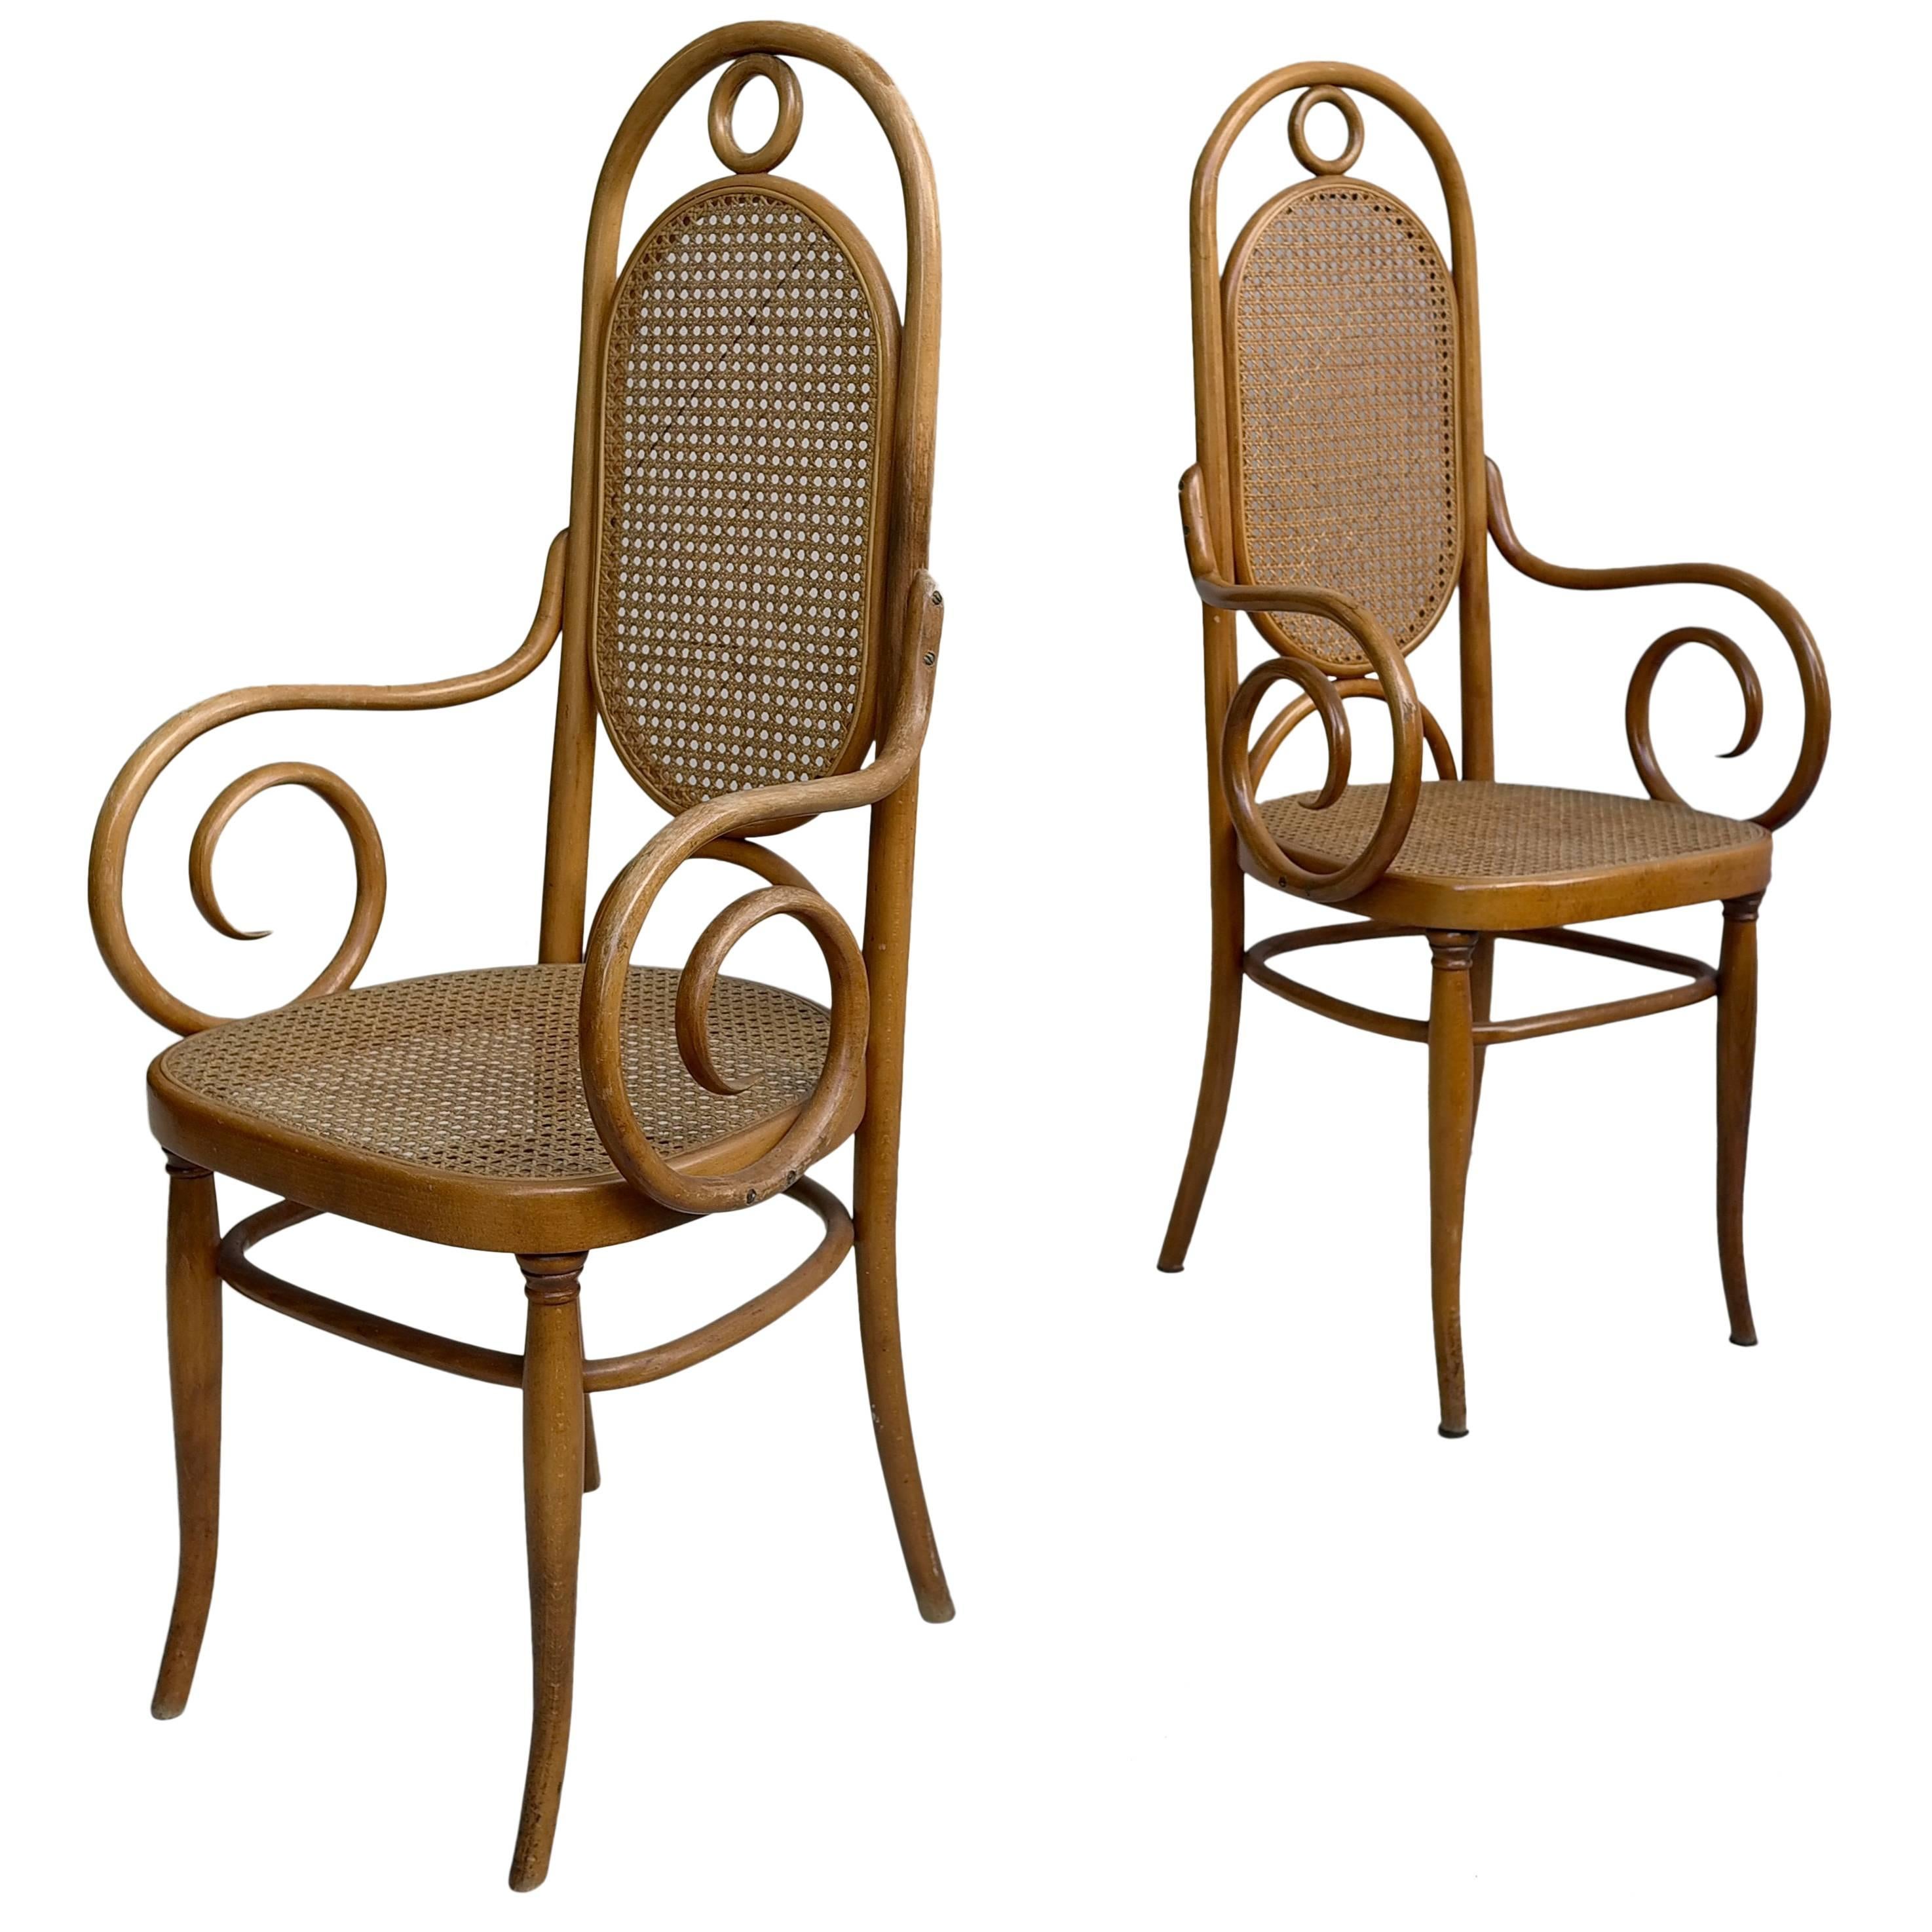 Pair of Sculptural Bendwood Side Chairs model 207R by Thonet